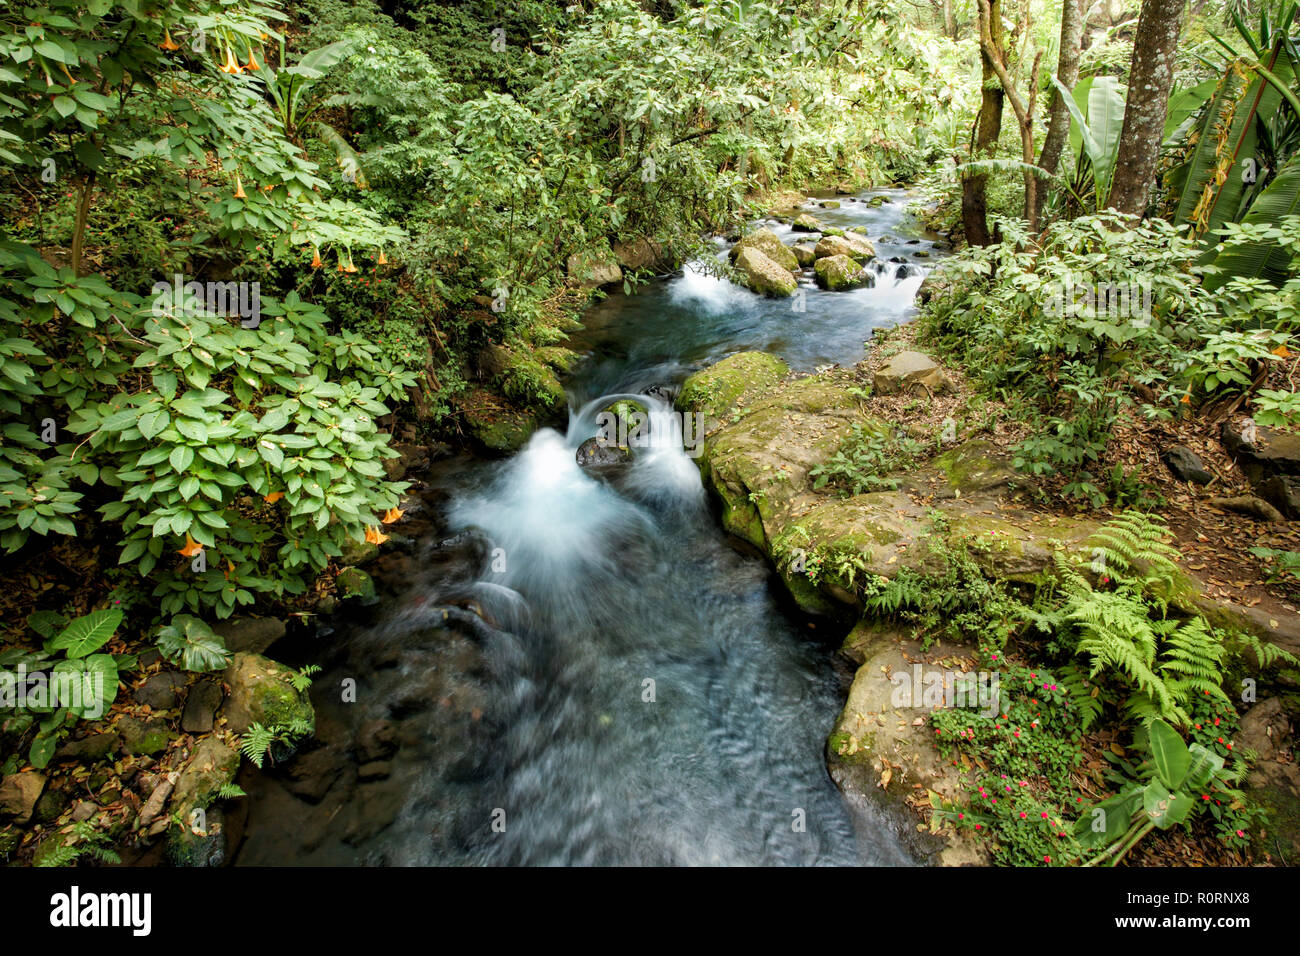 The Cupatitzio River flows through the lush vegetation of Uruapan, Mexico's national park. Stock Photo